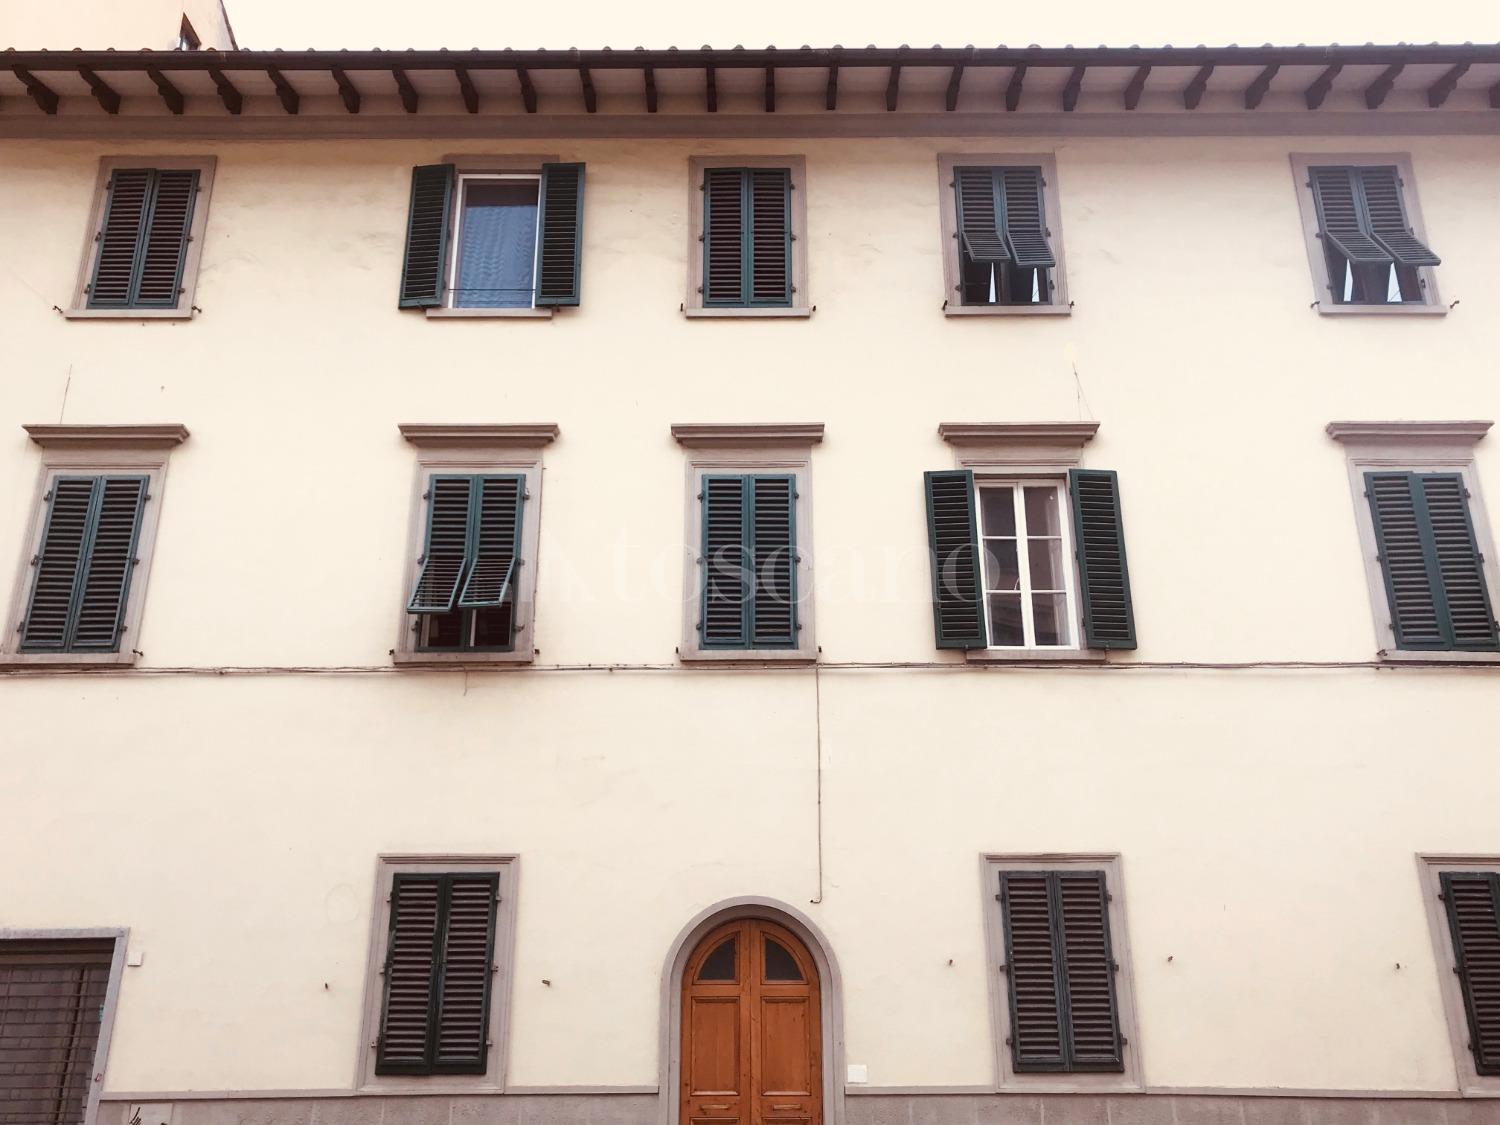 Vendita Casa A Firenze In Via Giacomini Fra Bartolomeo 27 2019